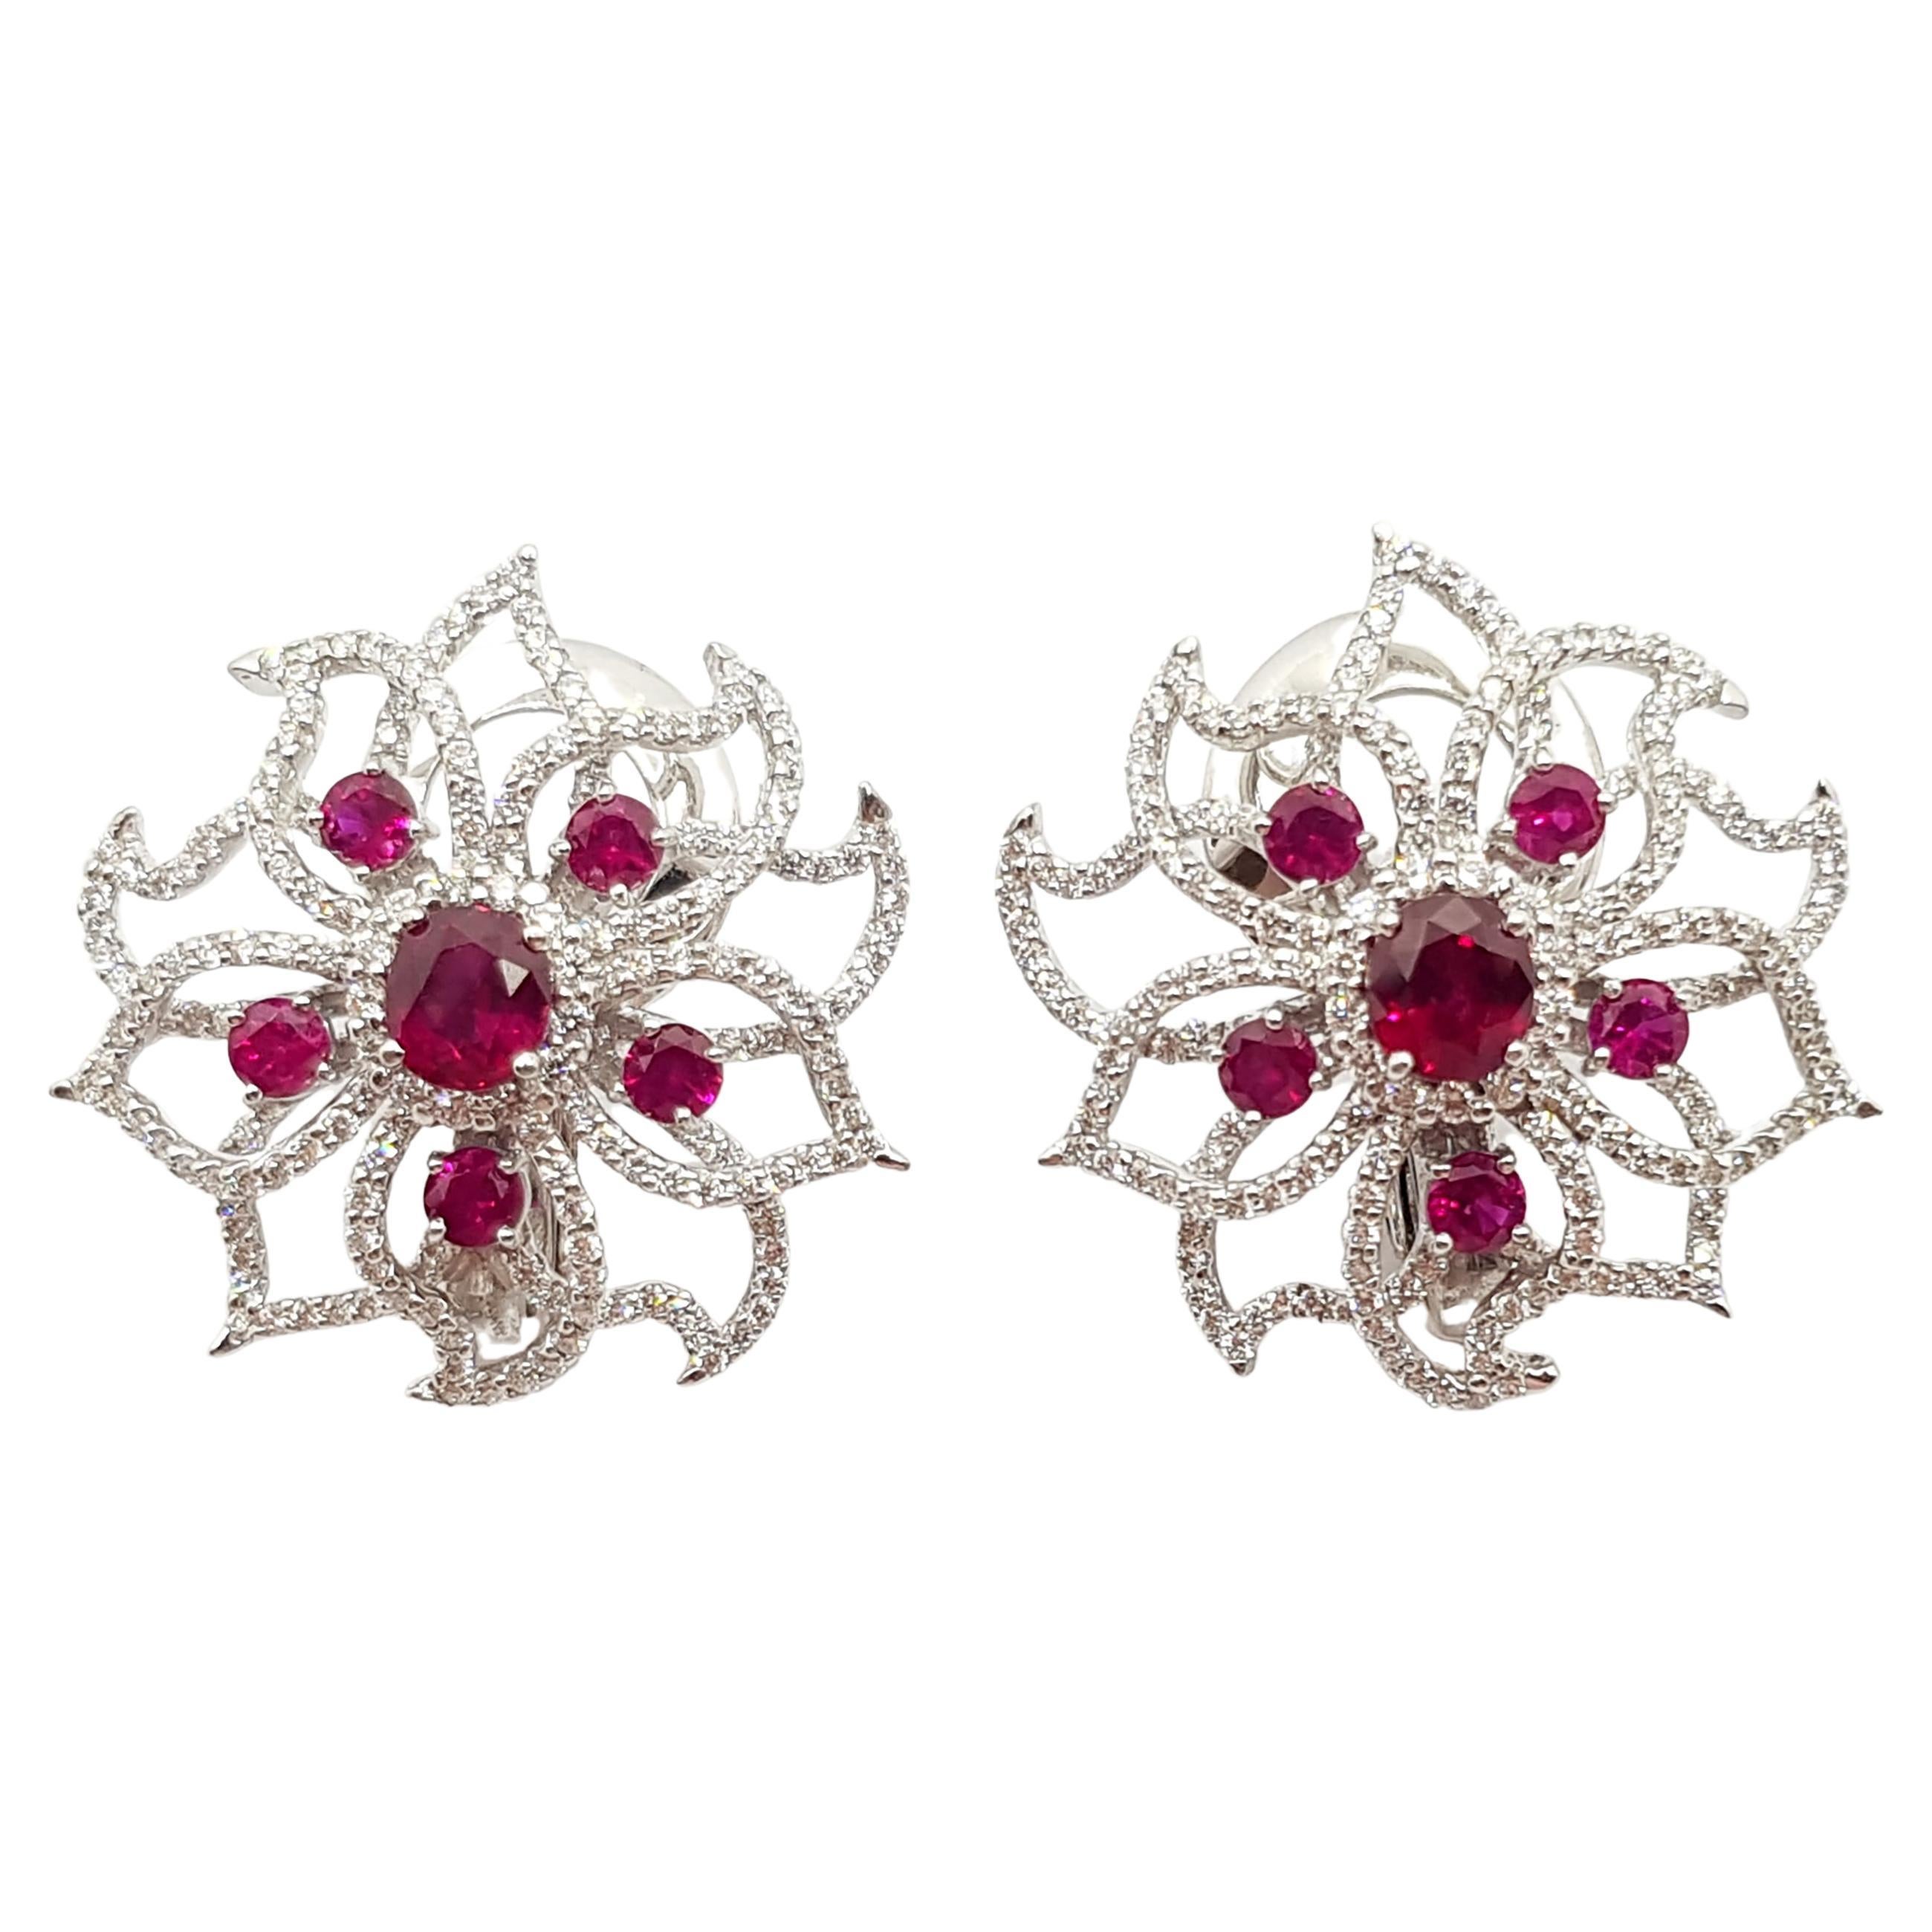 Ruby with Diamond Earrings set in 18 Karat White Gold Settings